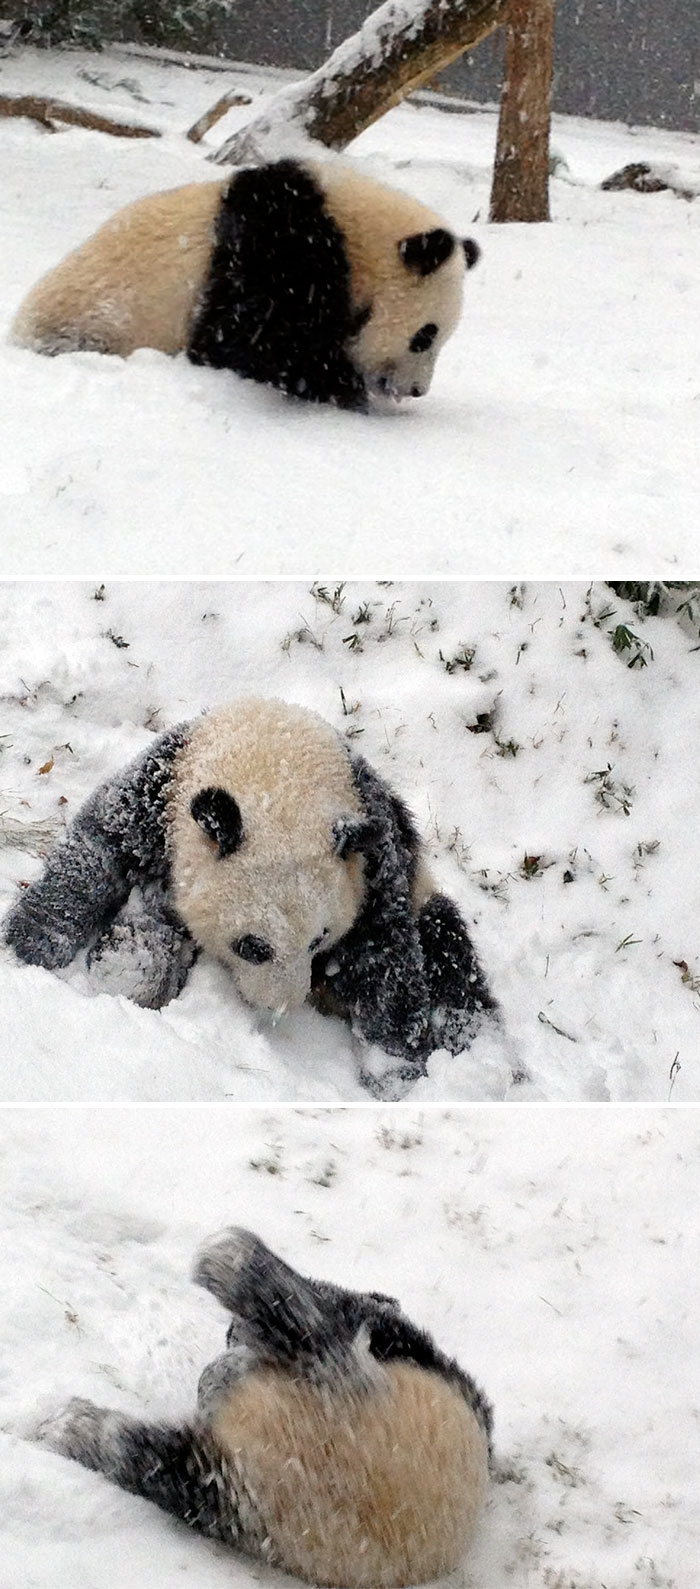 Panda Cub's First Snow Day